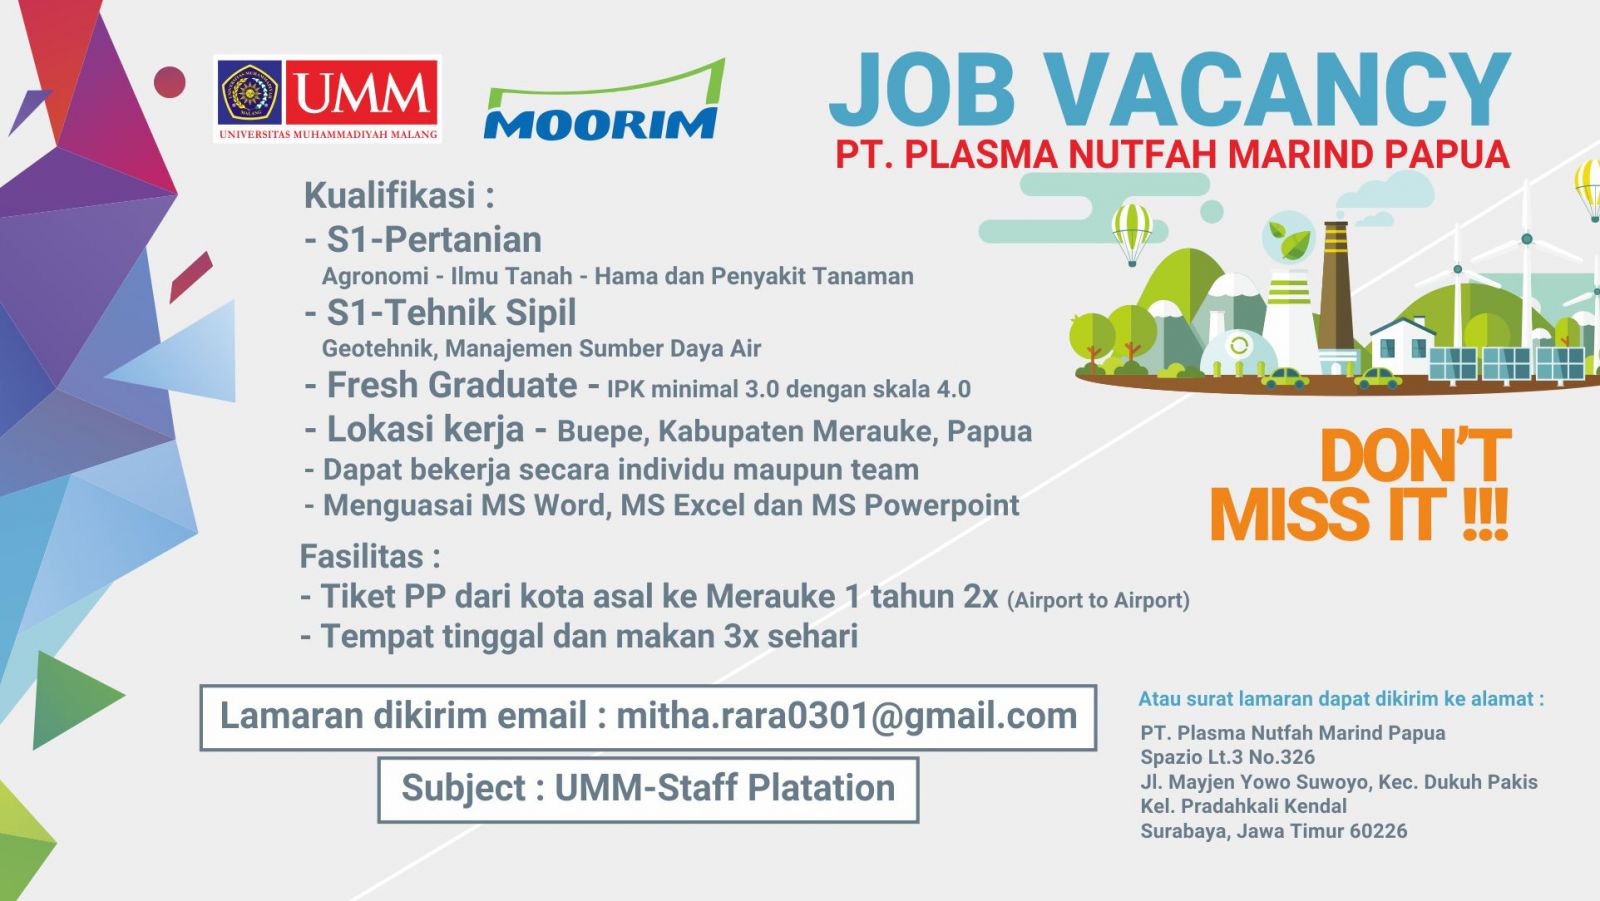 job vacancy pt. plasma nutfah marind papua